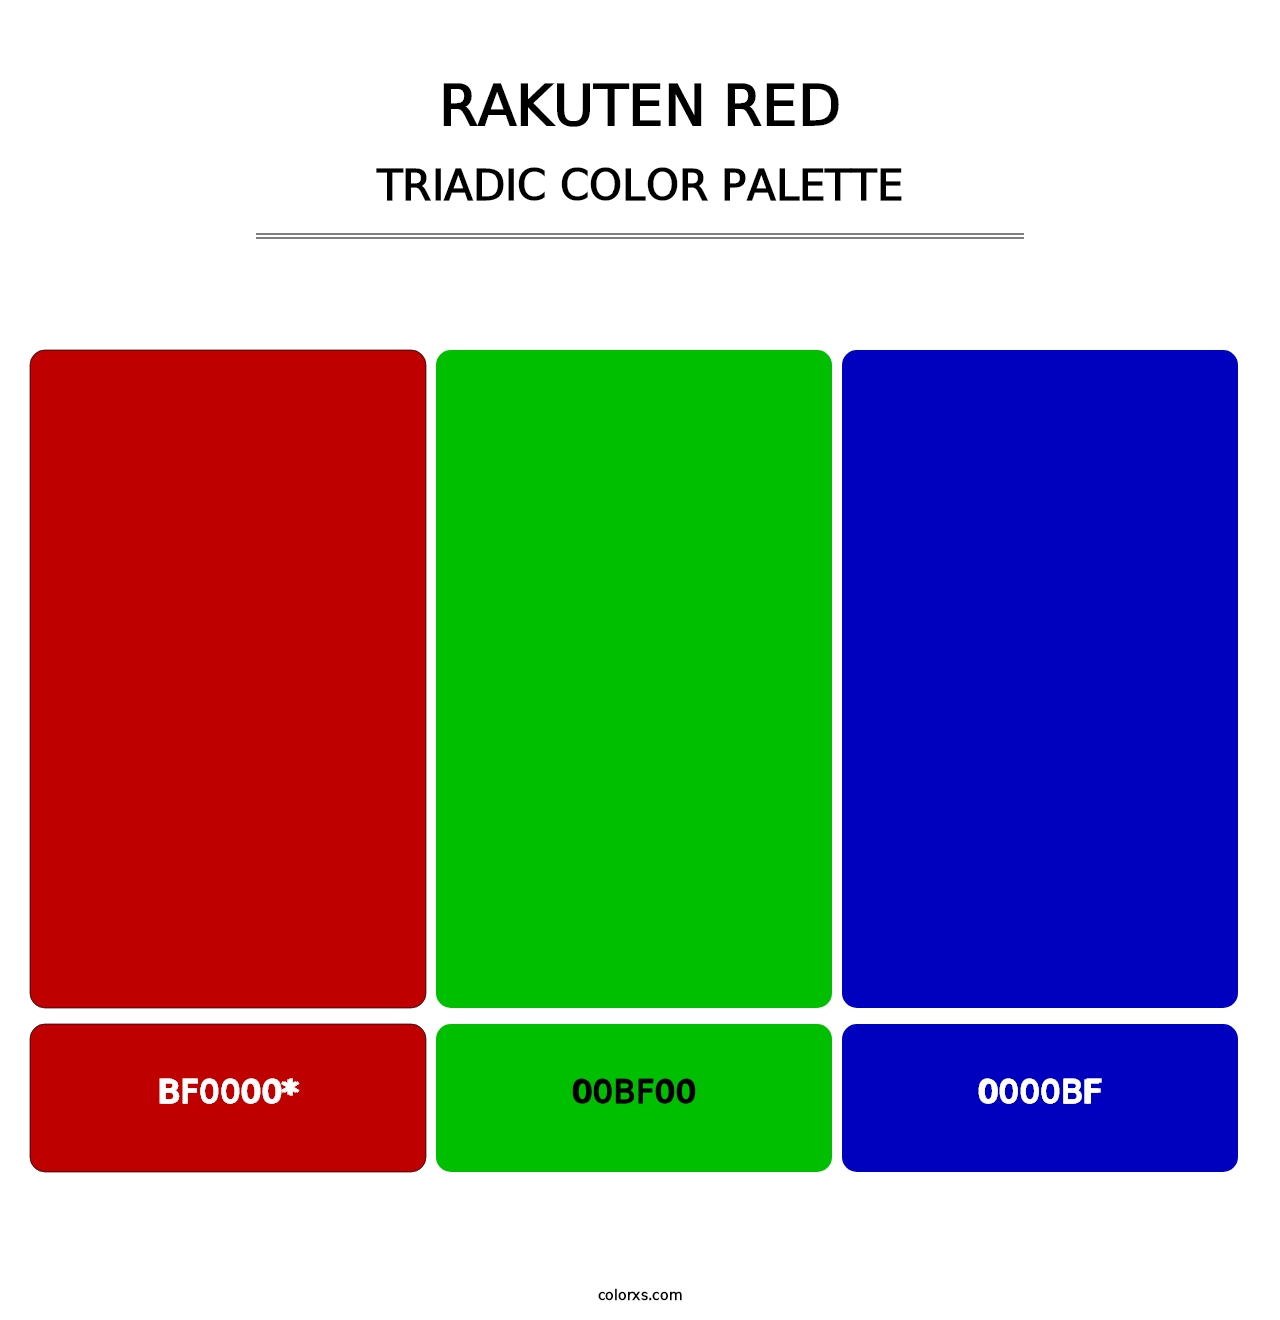 Rakuten Red - Triadic Color Palette